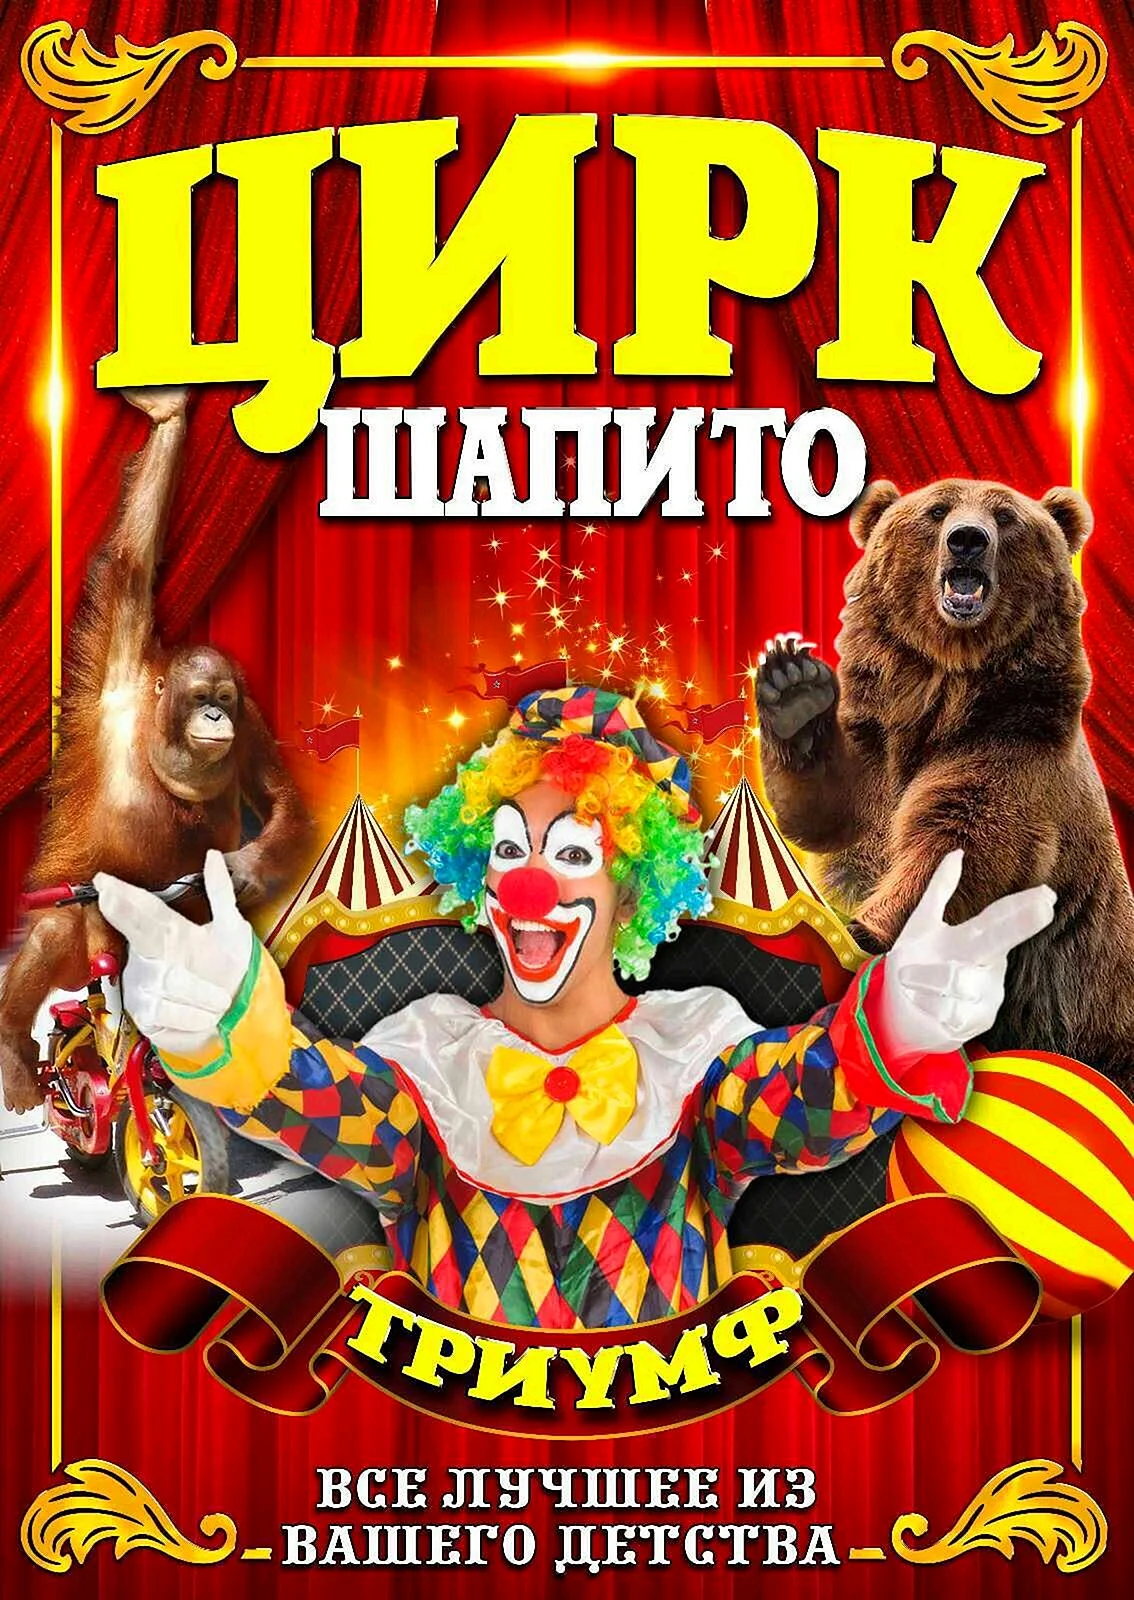 Афиша цирка